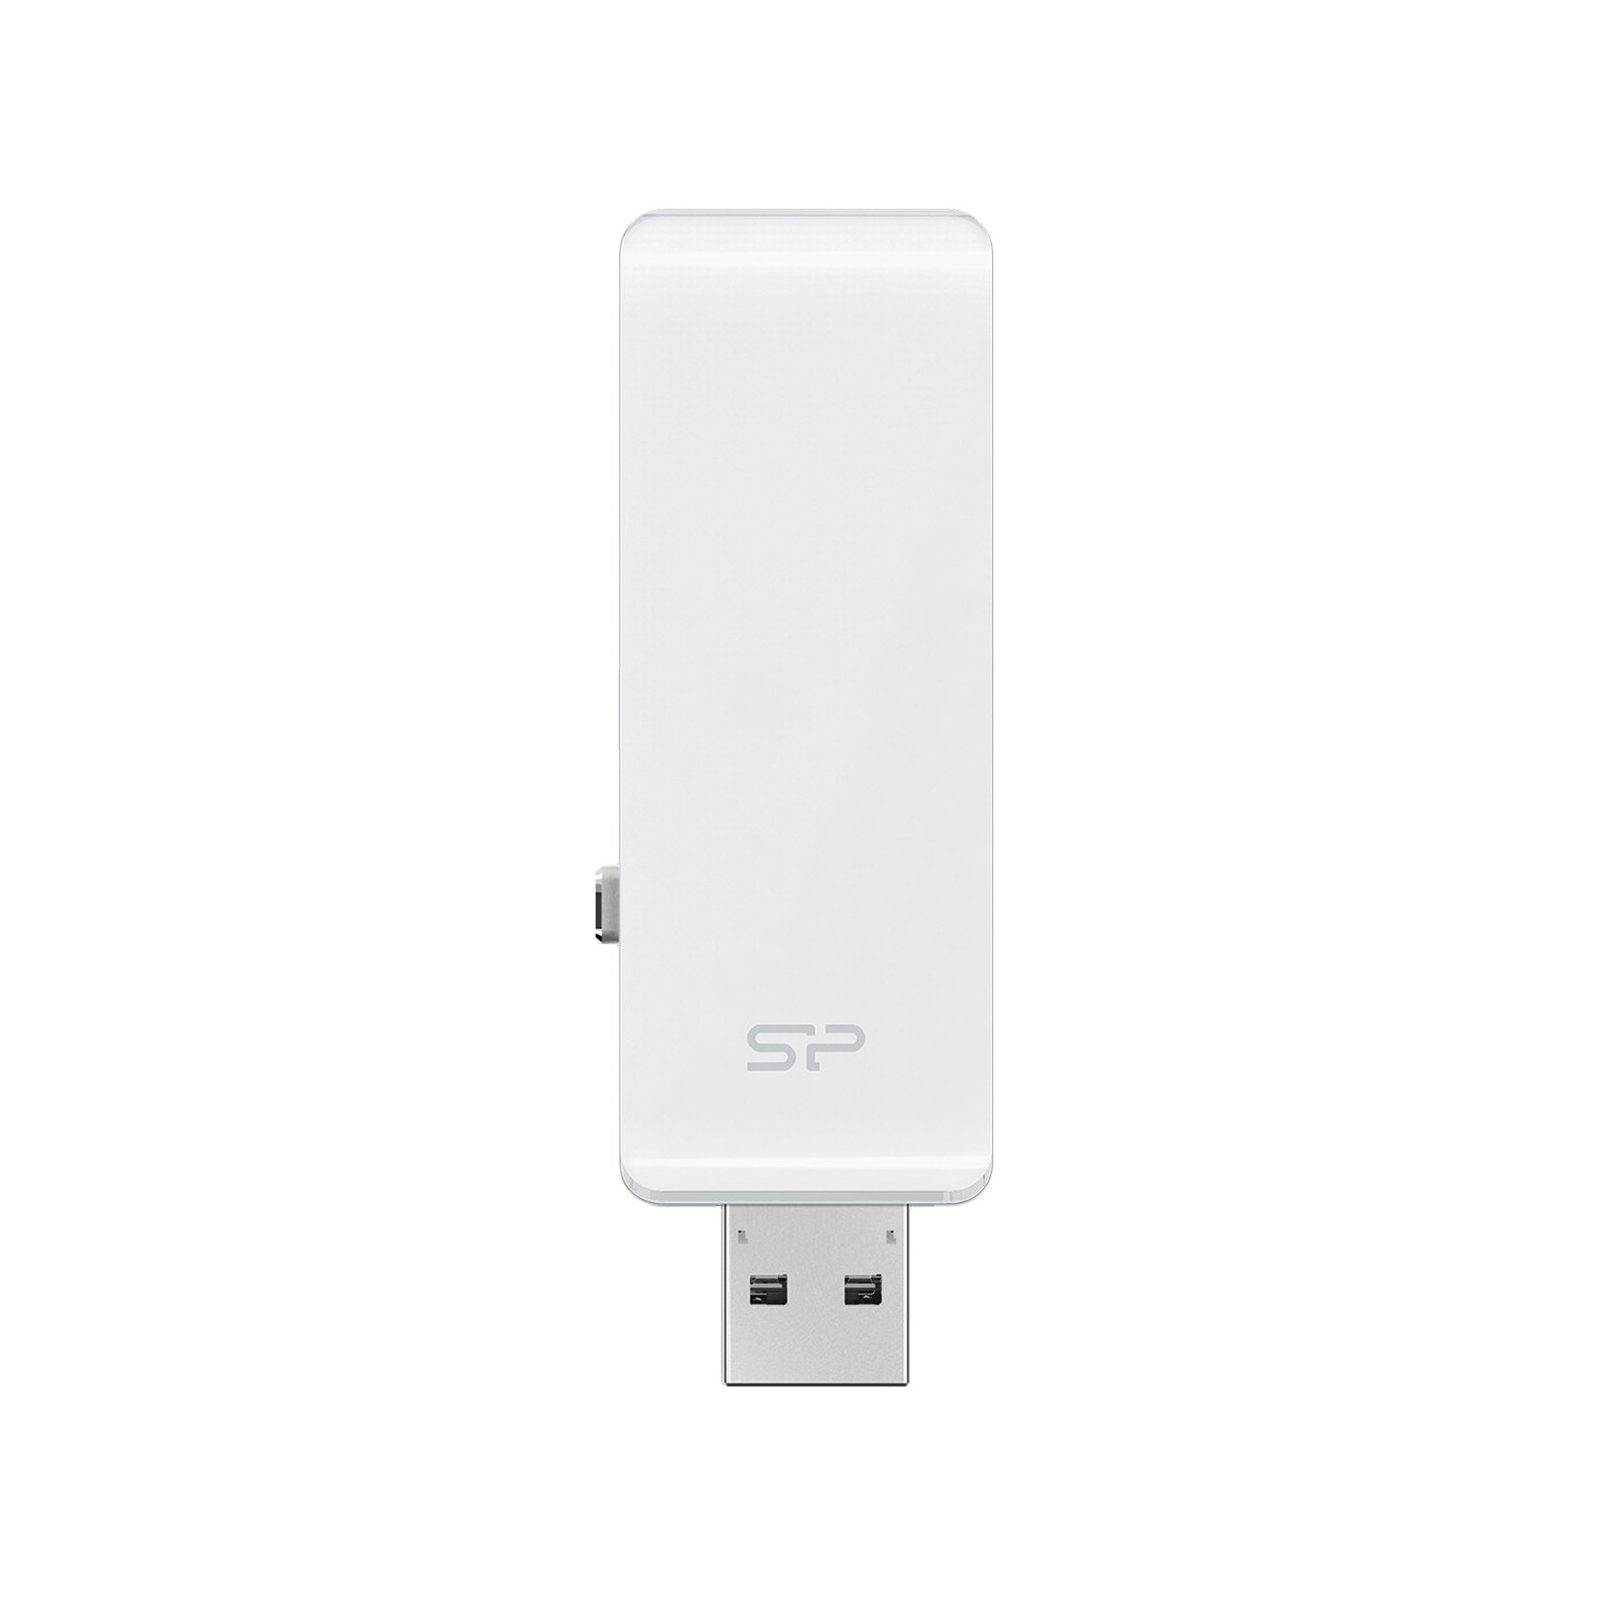 USB флеш накопитель Silicon Power 128GB xDrive Z30 White USB 3.0 (SP128GBLU3Z30V1W) изображение 4